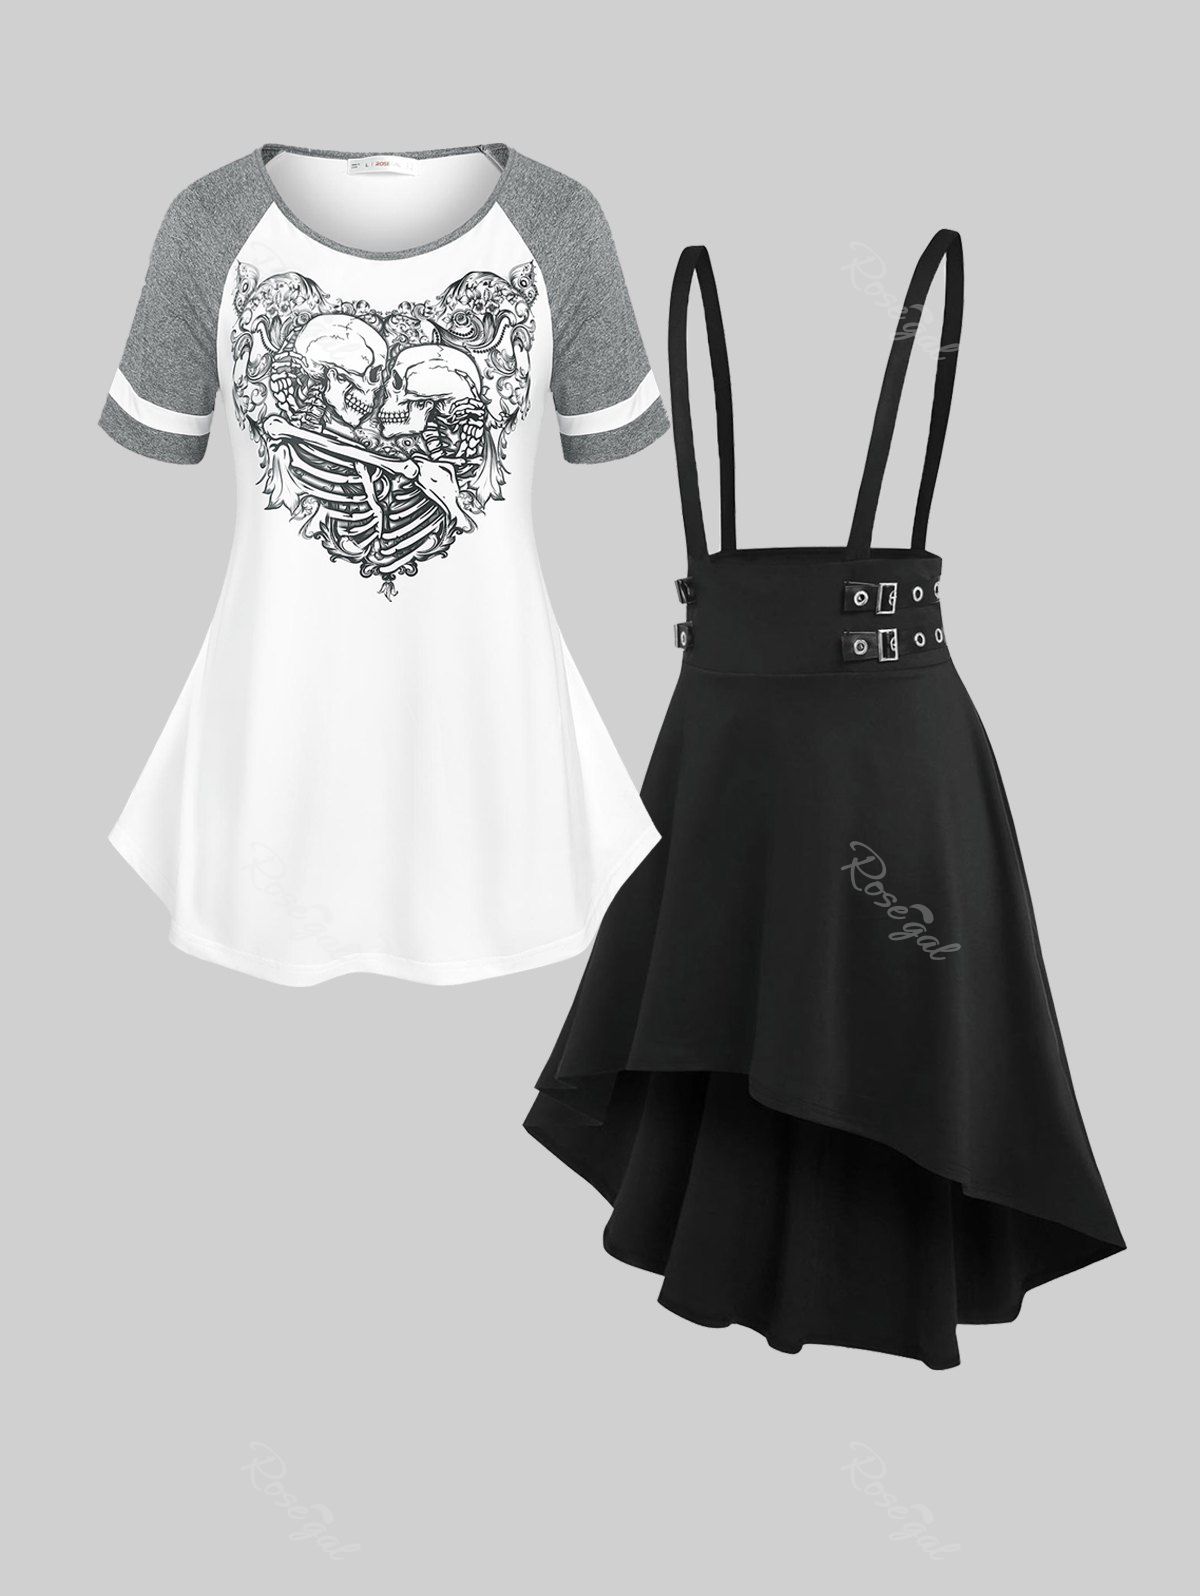 Hot Gothic Skeleton Raglan Sleeve Tee and Asymmetric Suspender Skirt Plus Size Outfit  